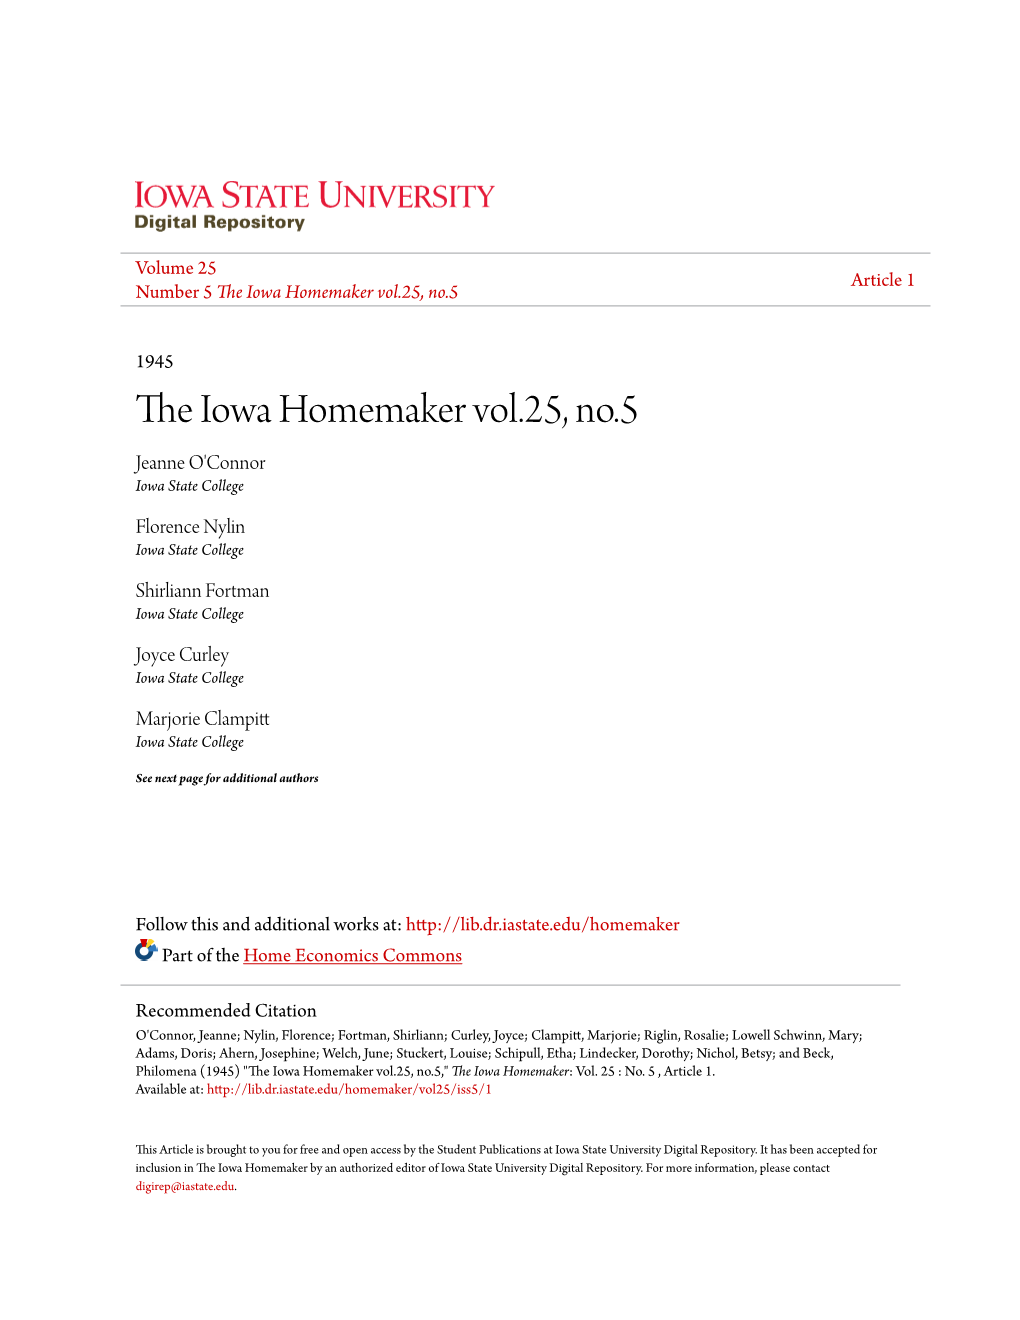 The Iowa Homemaker Vol.25, No.5